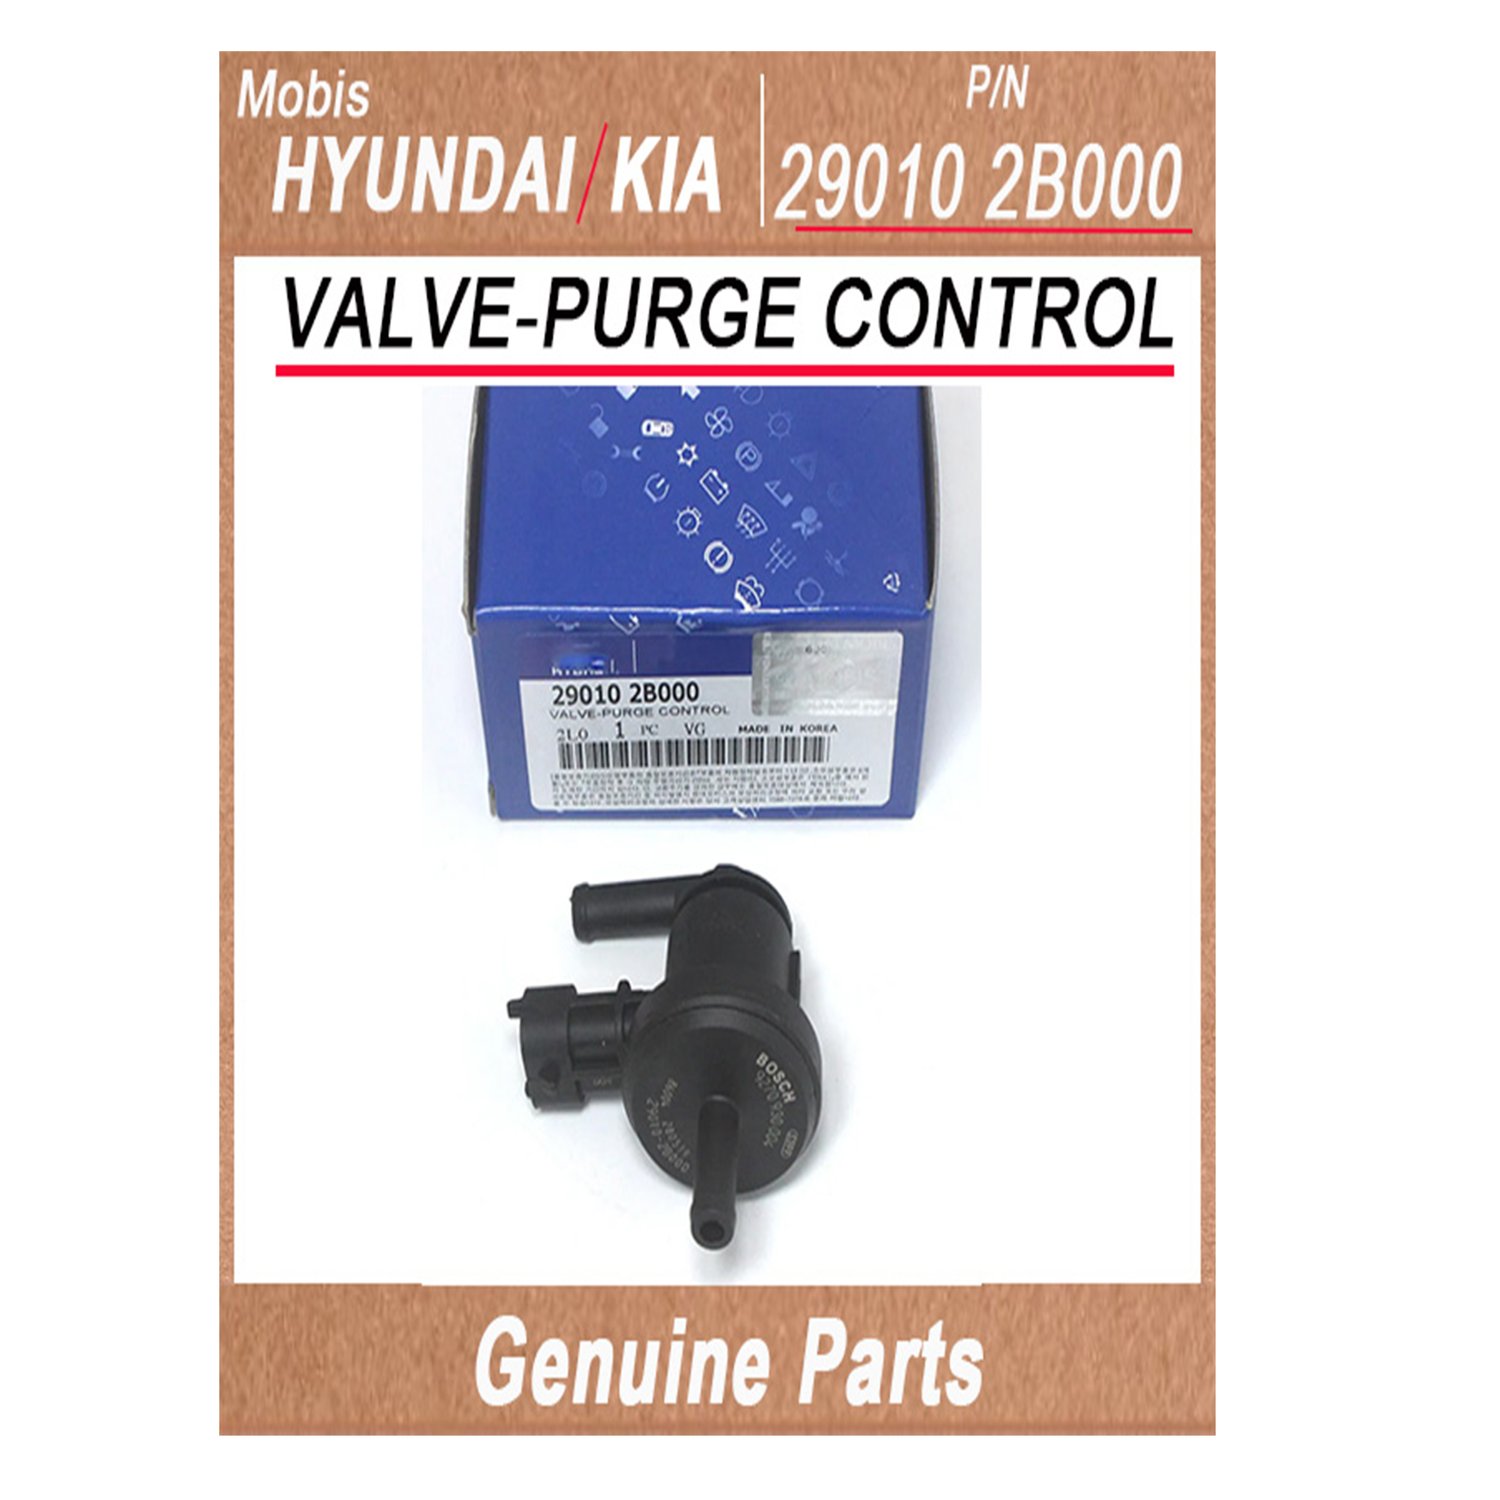 290102B000 _ VALVE_PURGE CONTROL _ Genuine Korean Automotive Spare Parts _ Hyundai Kia _Mobis_